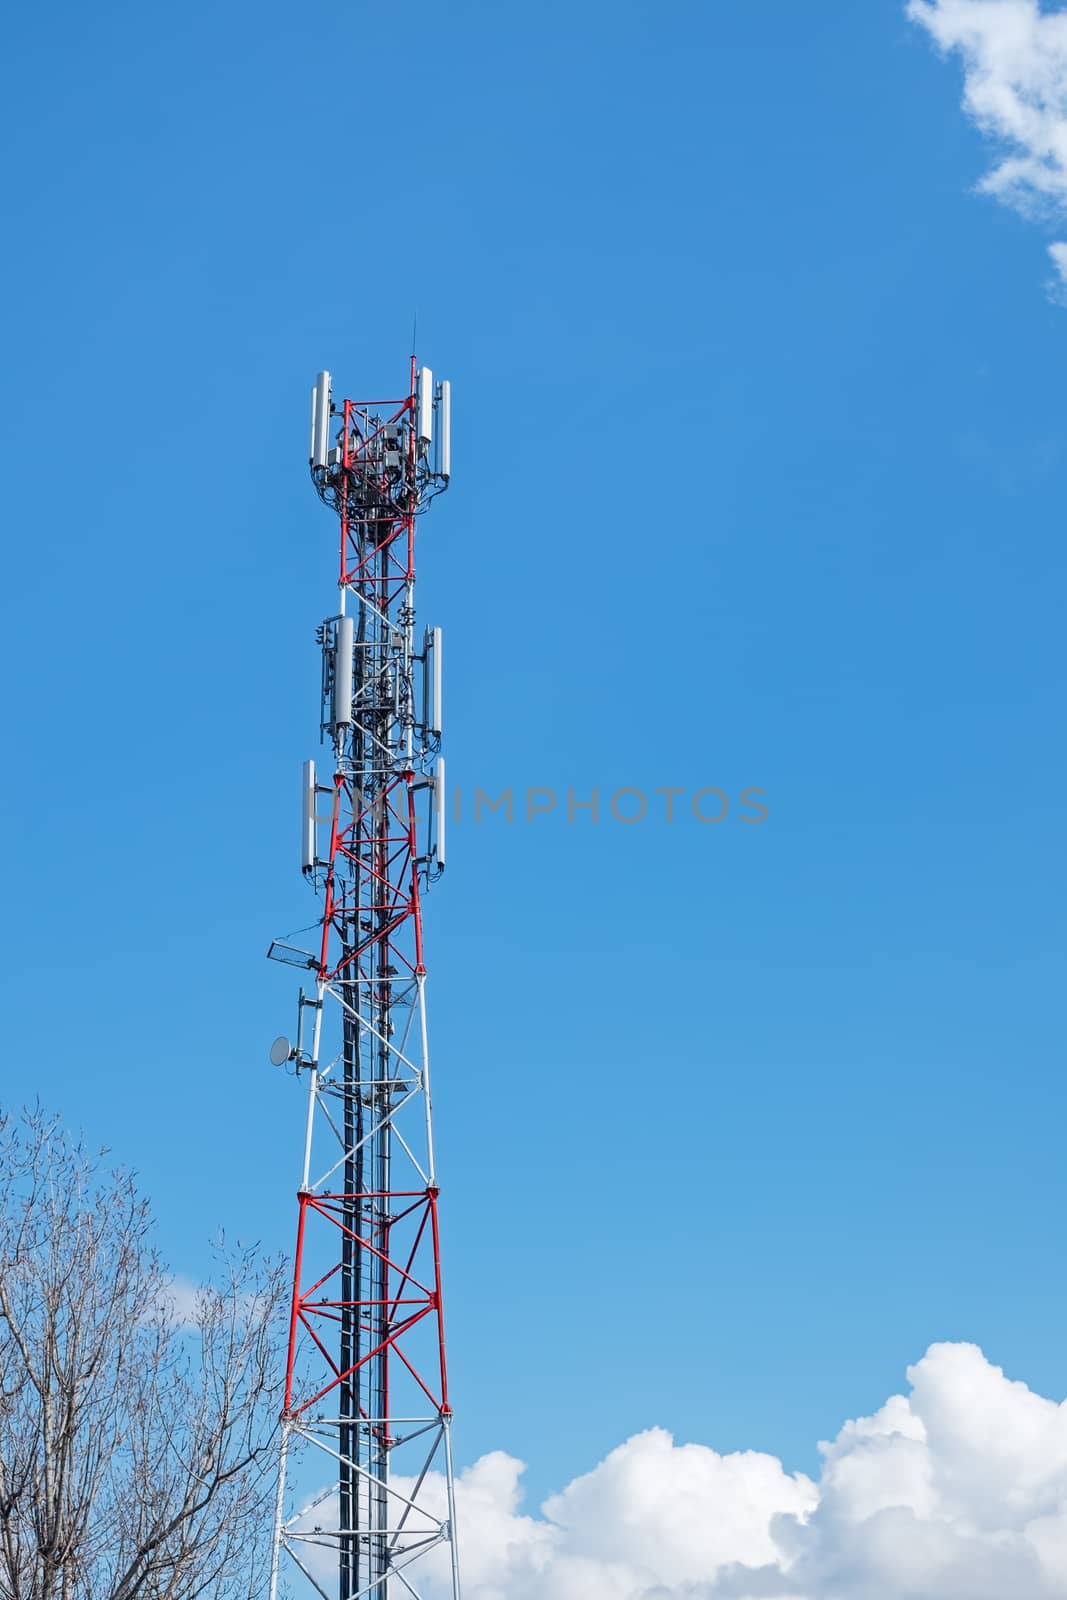 Telecomunication tower (antenna) over blue sky by Roberto